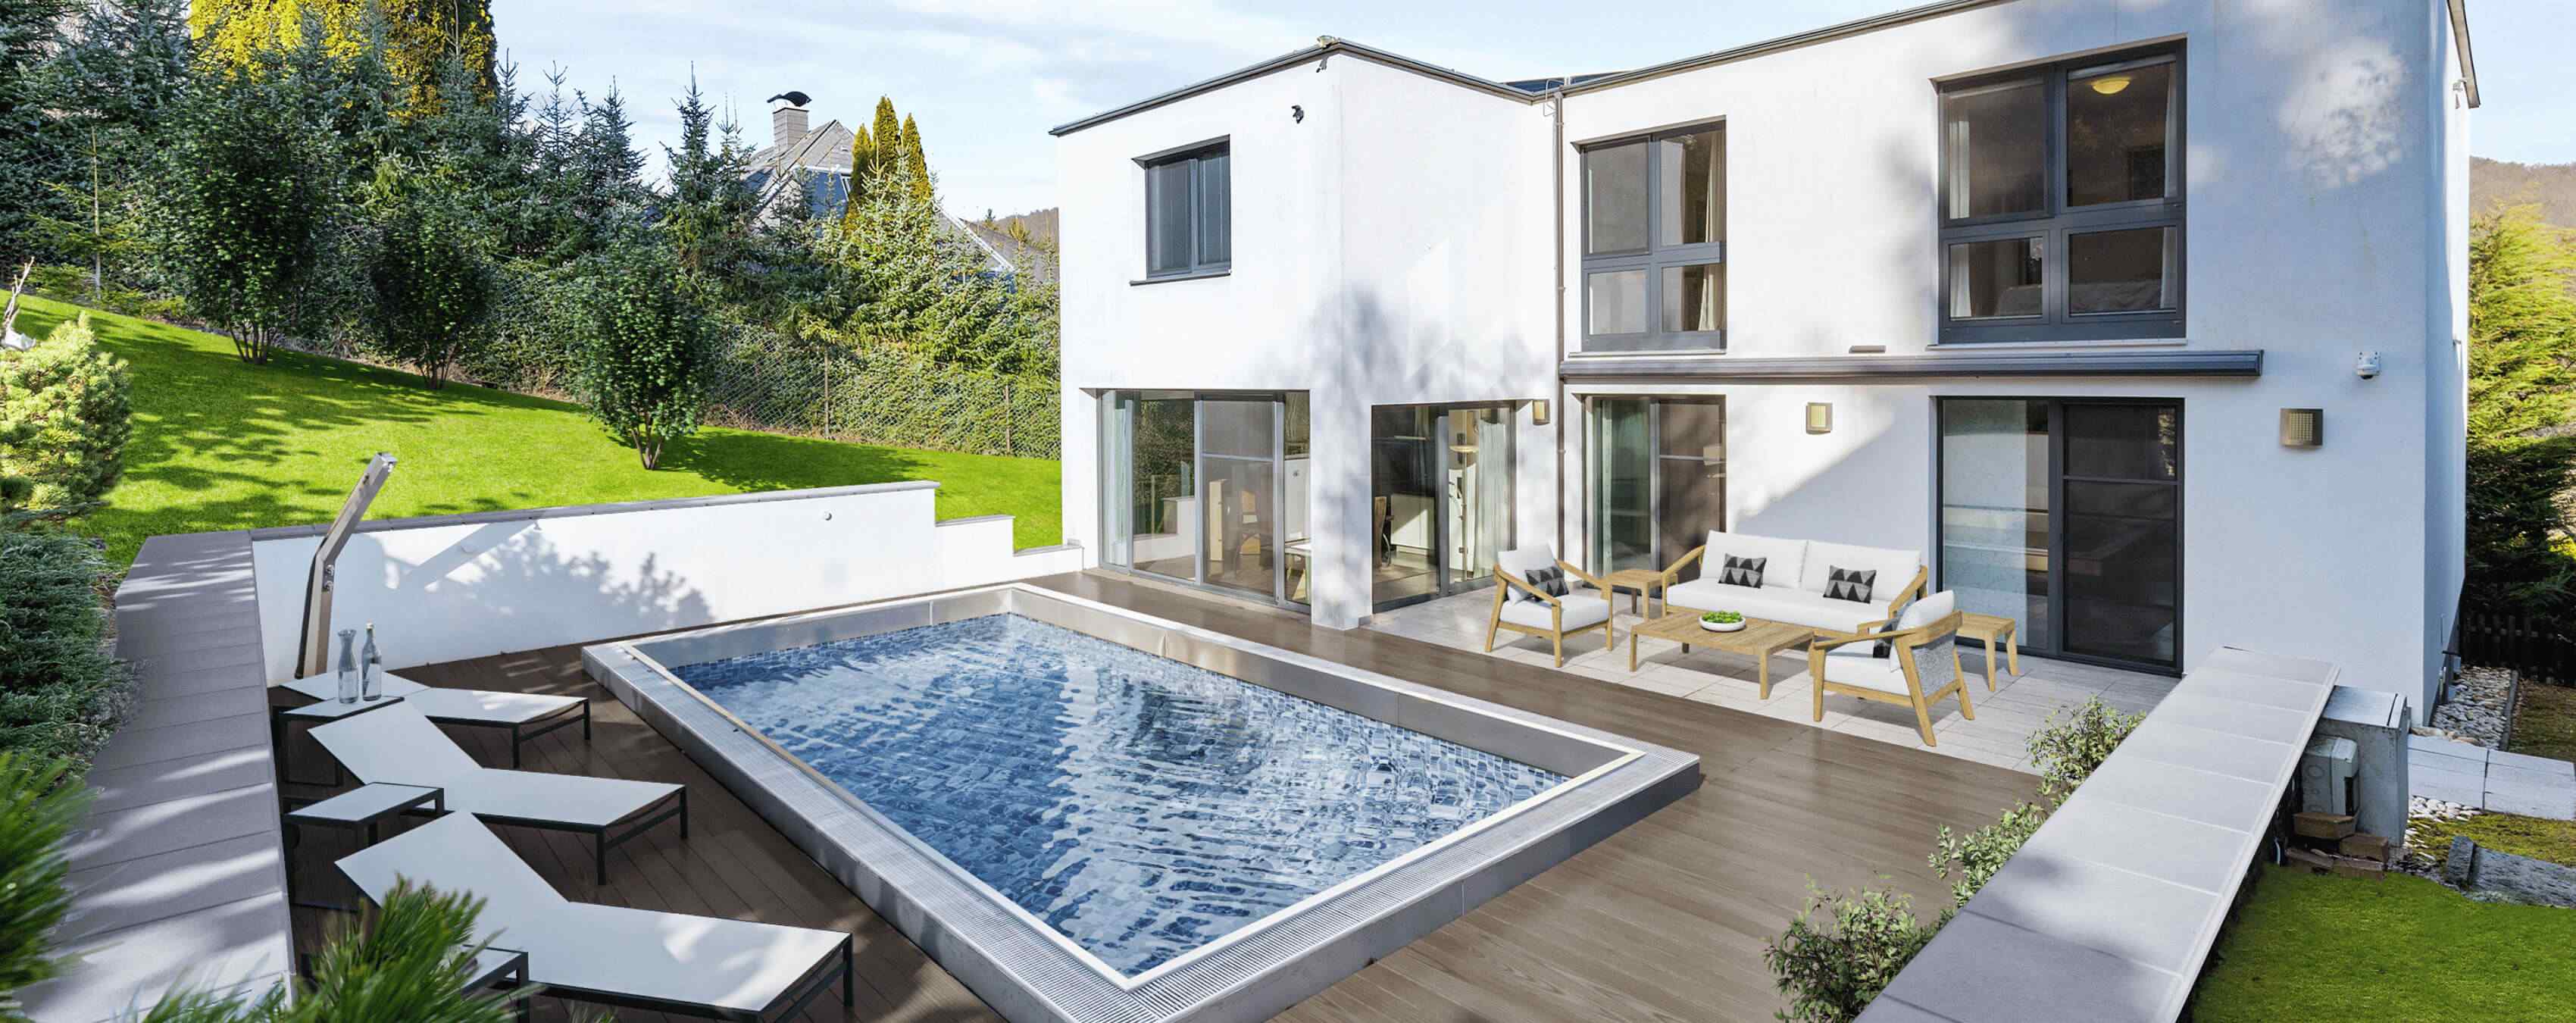 Фотография: Modern family villa with pool, garden and double garage